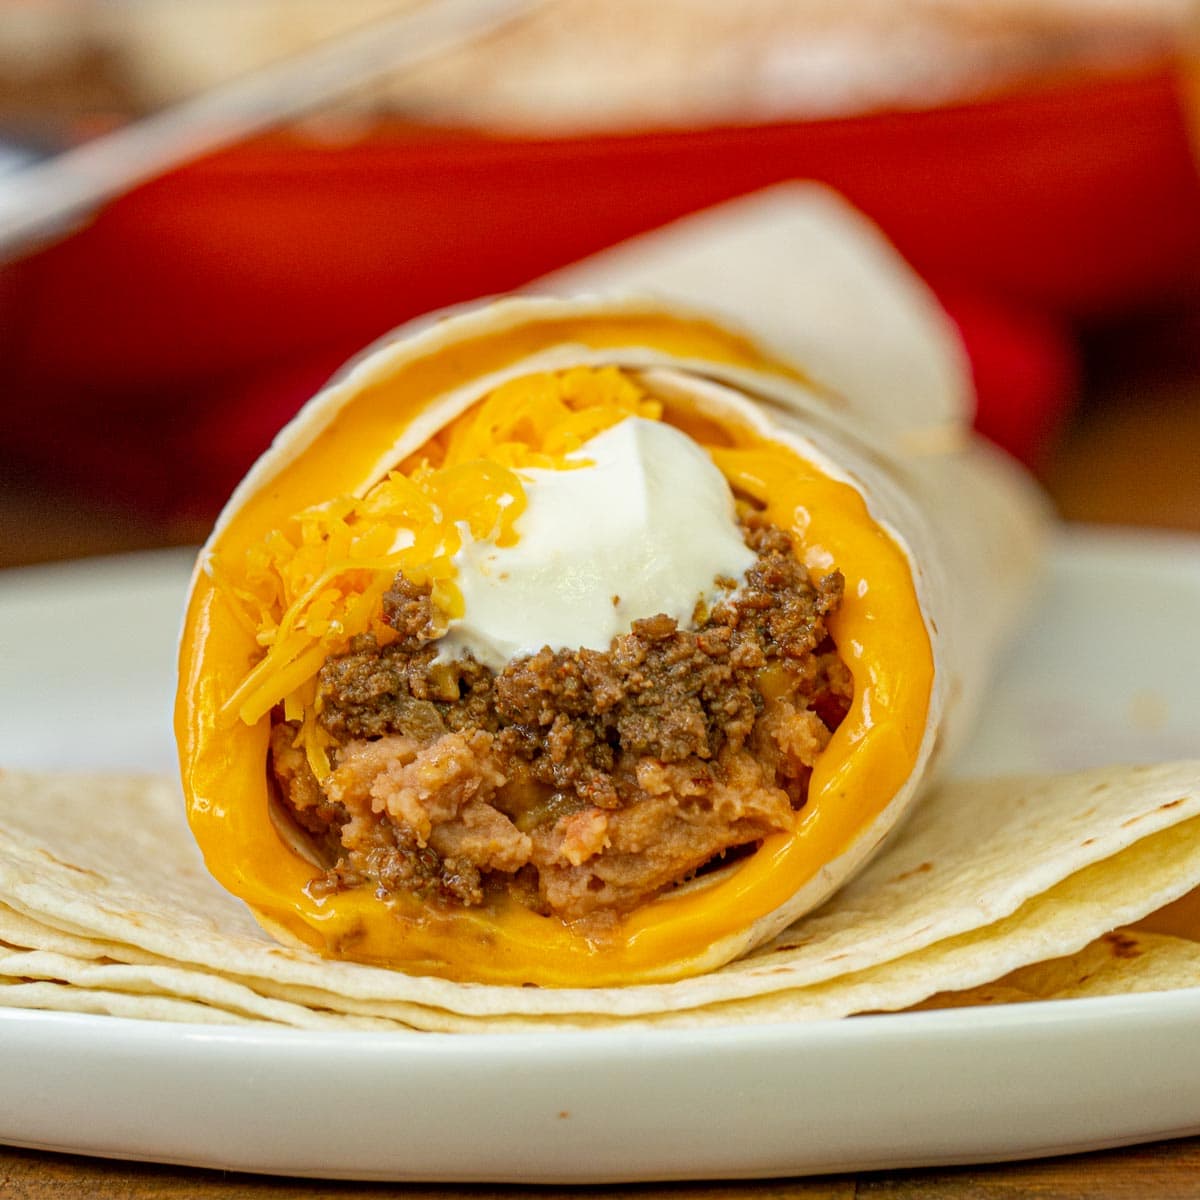 Taco Bell Burrito Menu